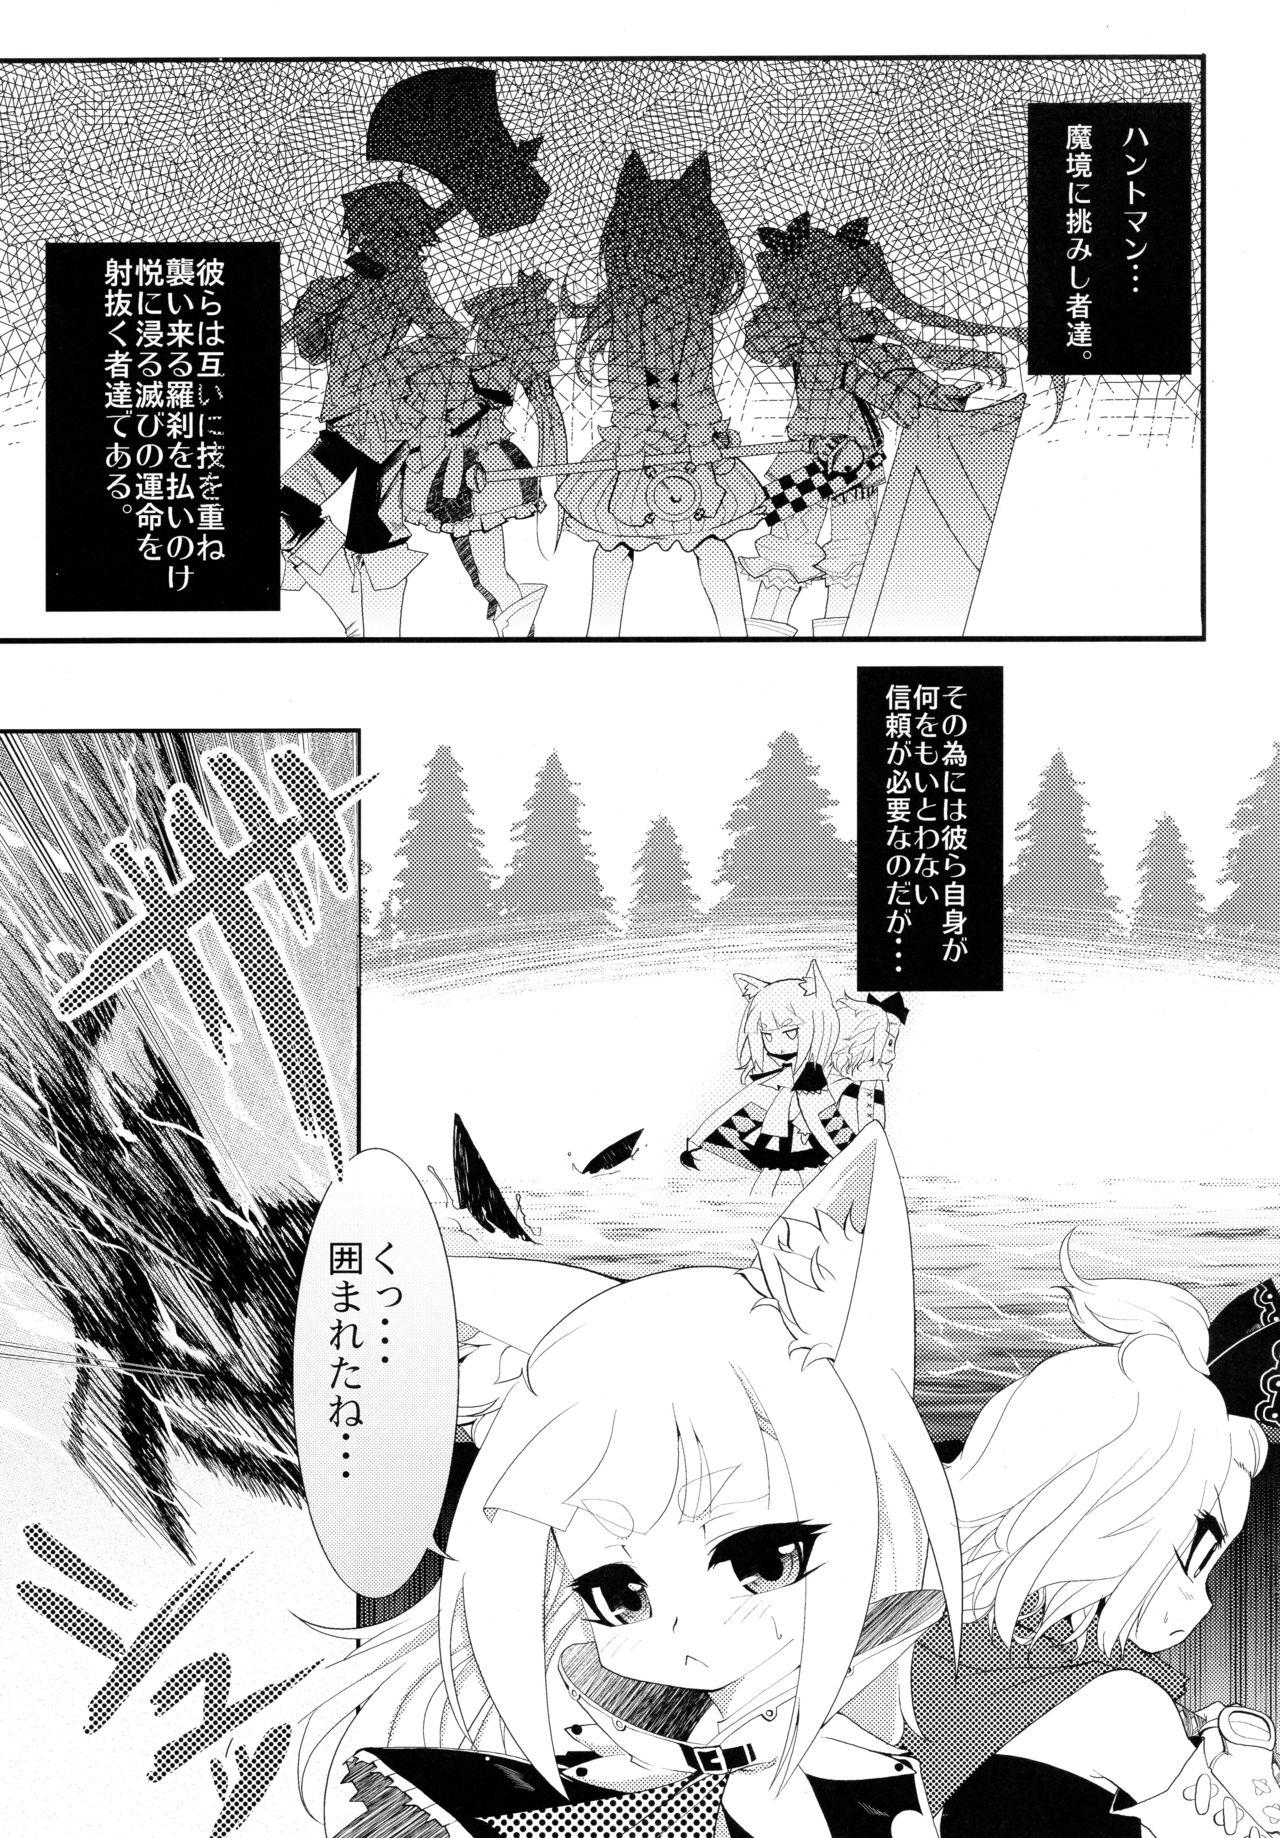 Tesao NEXUS 4 - 7th dragon Juggs - Page 2